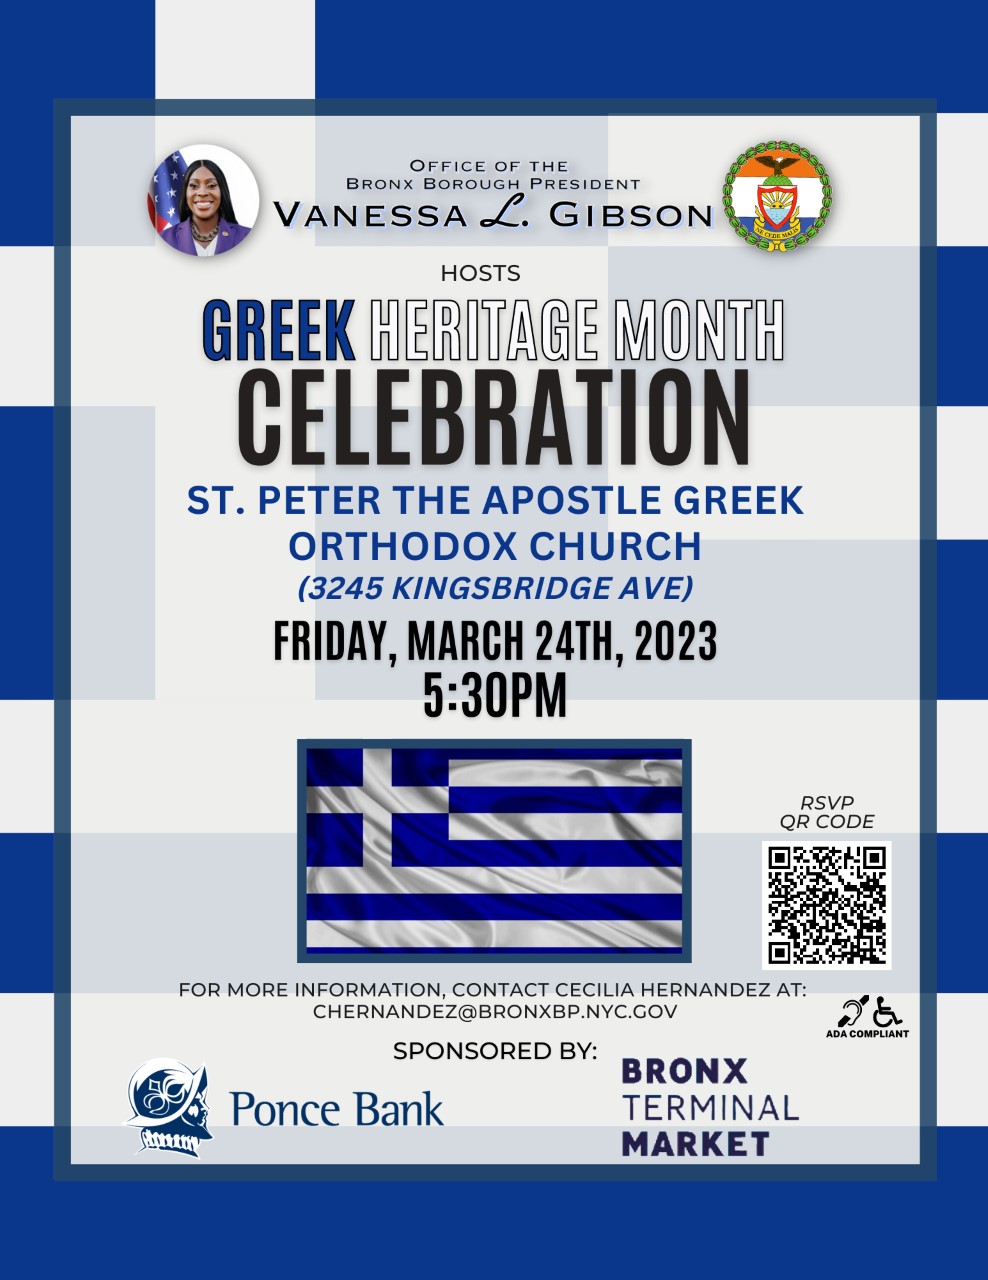 Flyer for Greek Heritage Month celebration on March 24 - email chernandez@bronxbp.nyc.gov for more info